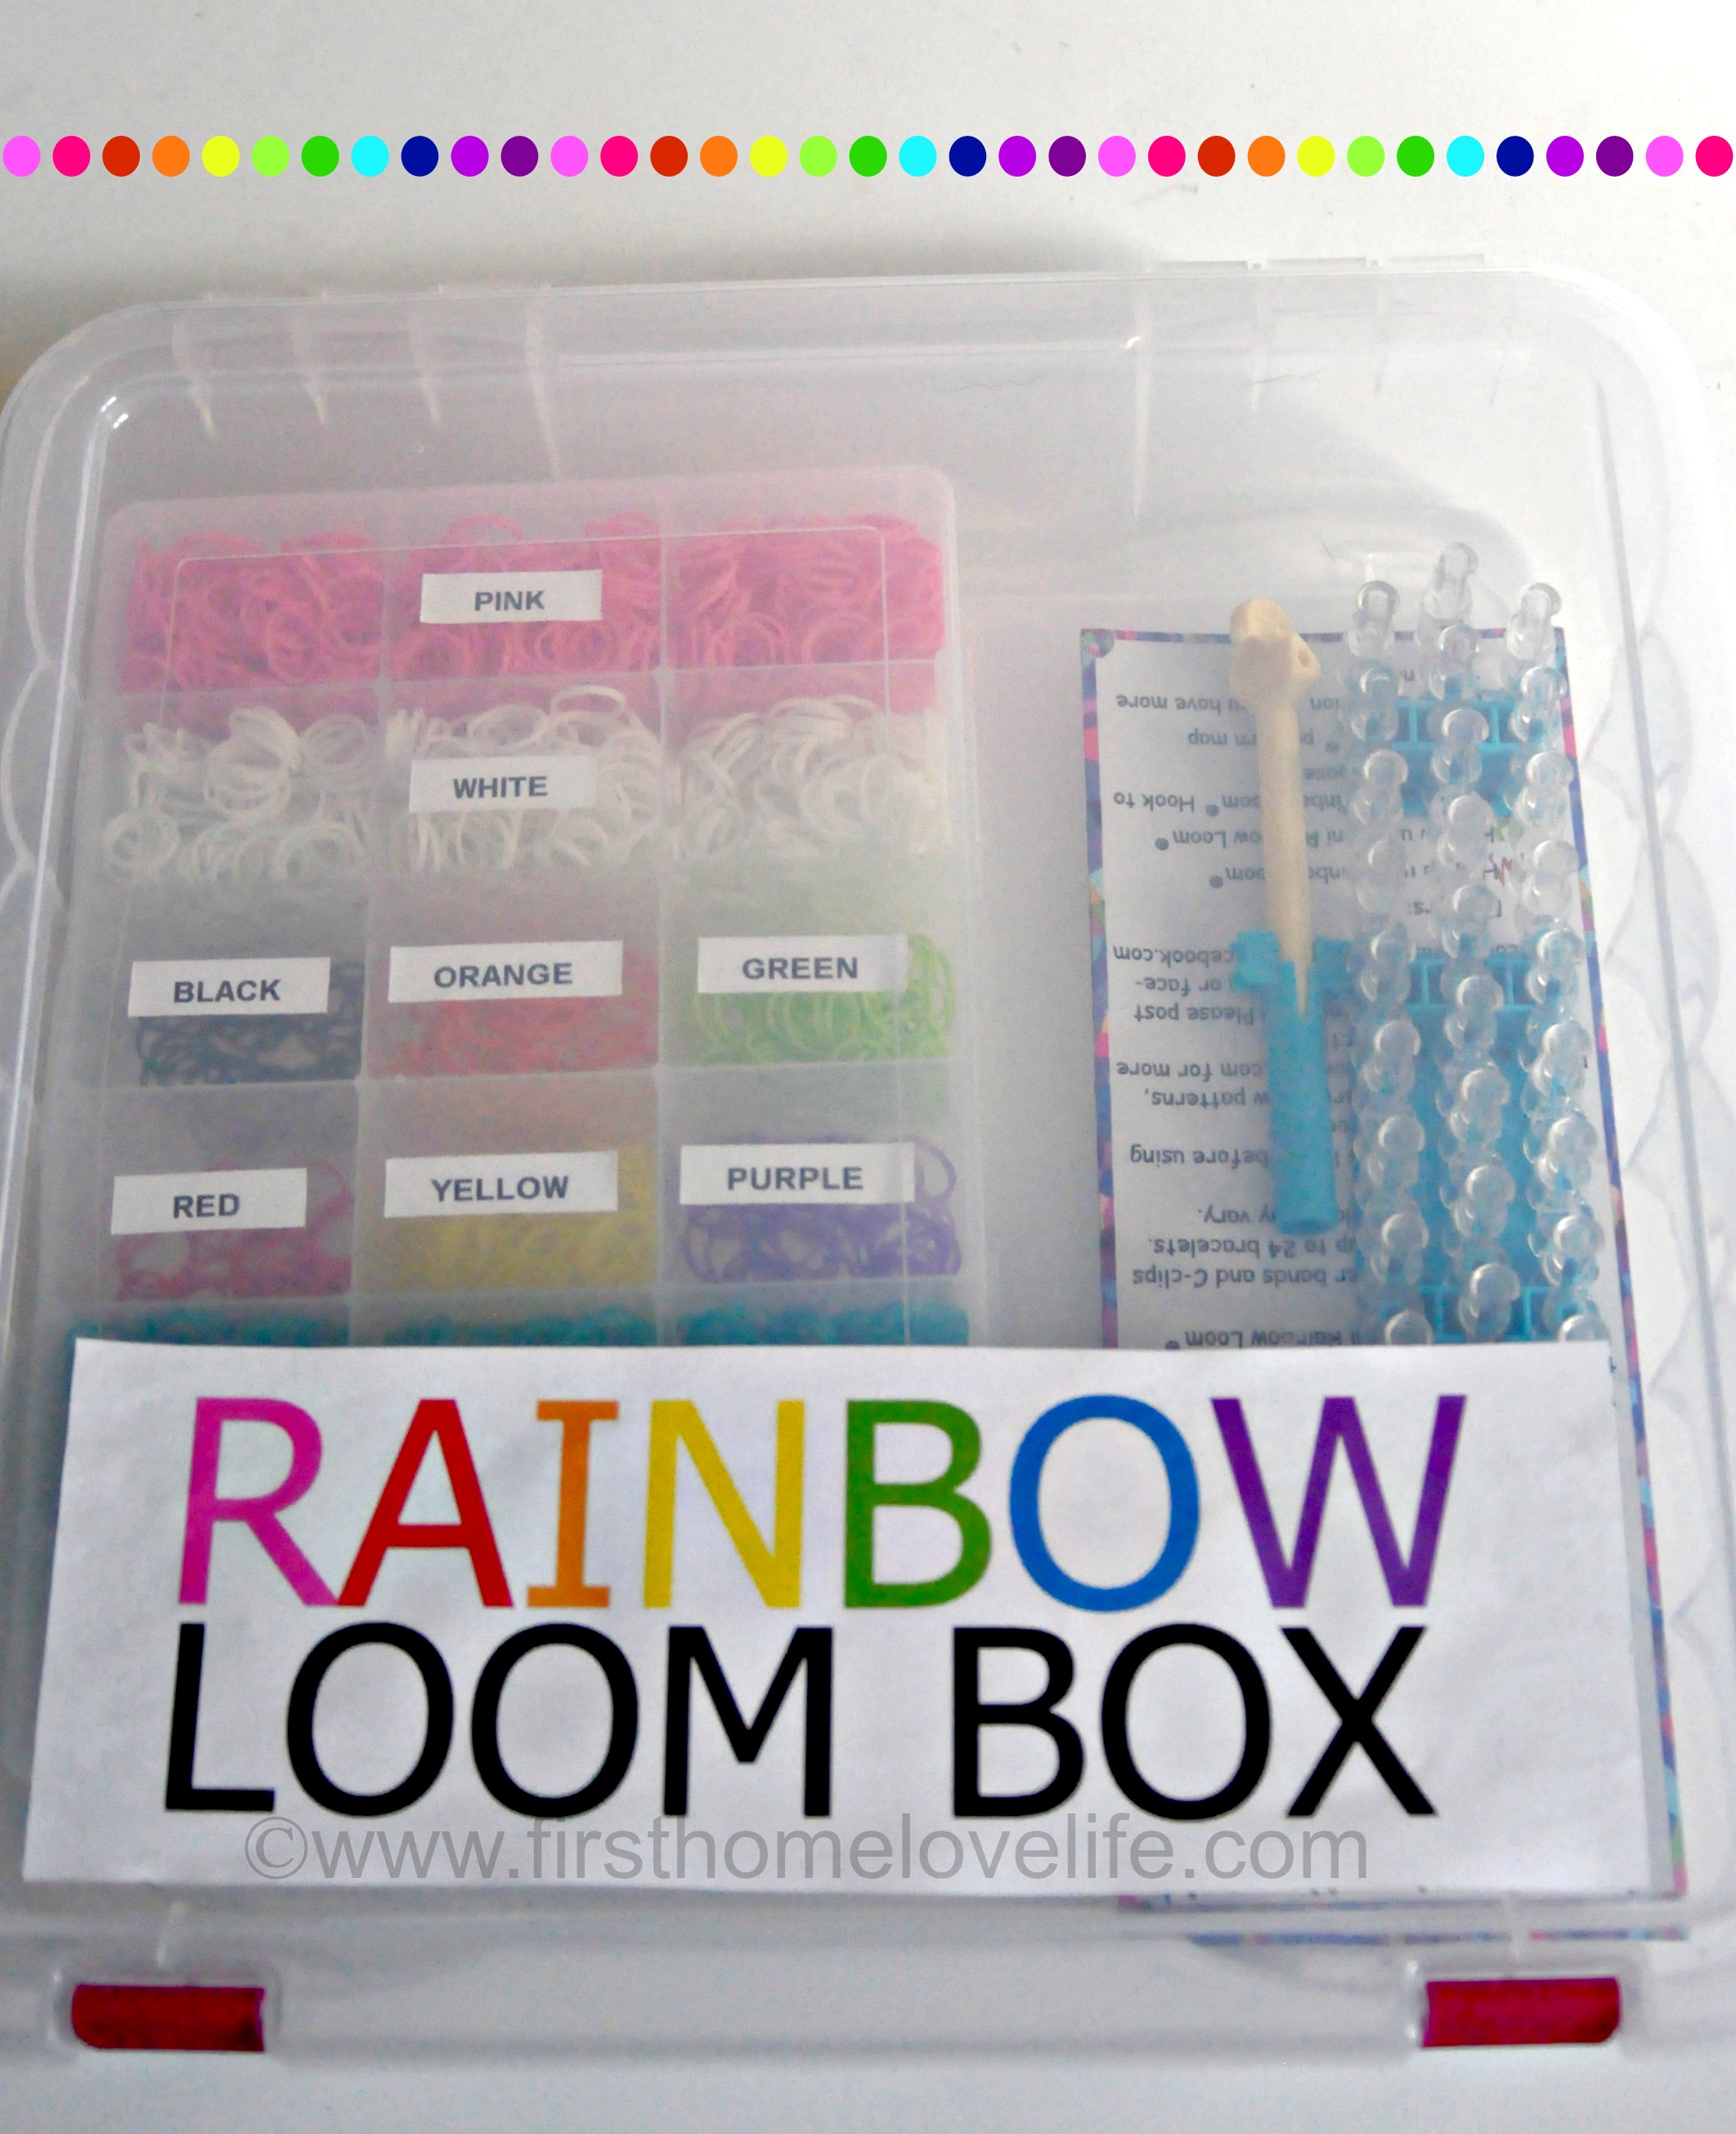 Reisbureau verkwistend Memoriseren Rainbow Loom Storage Box - First Home Love Life